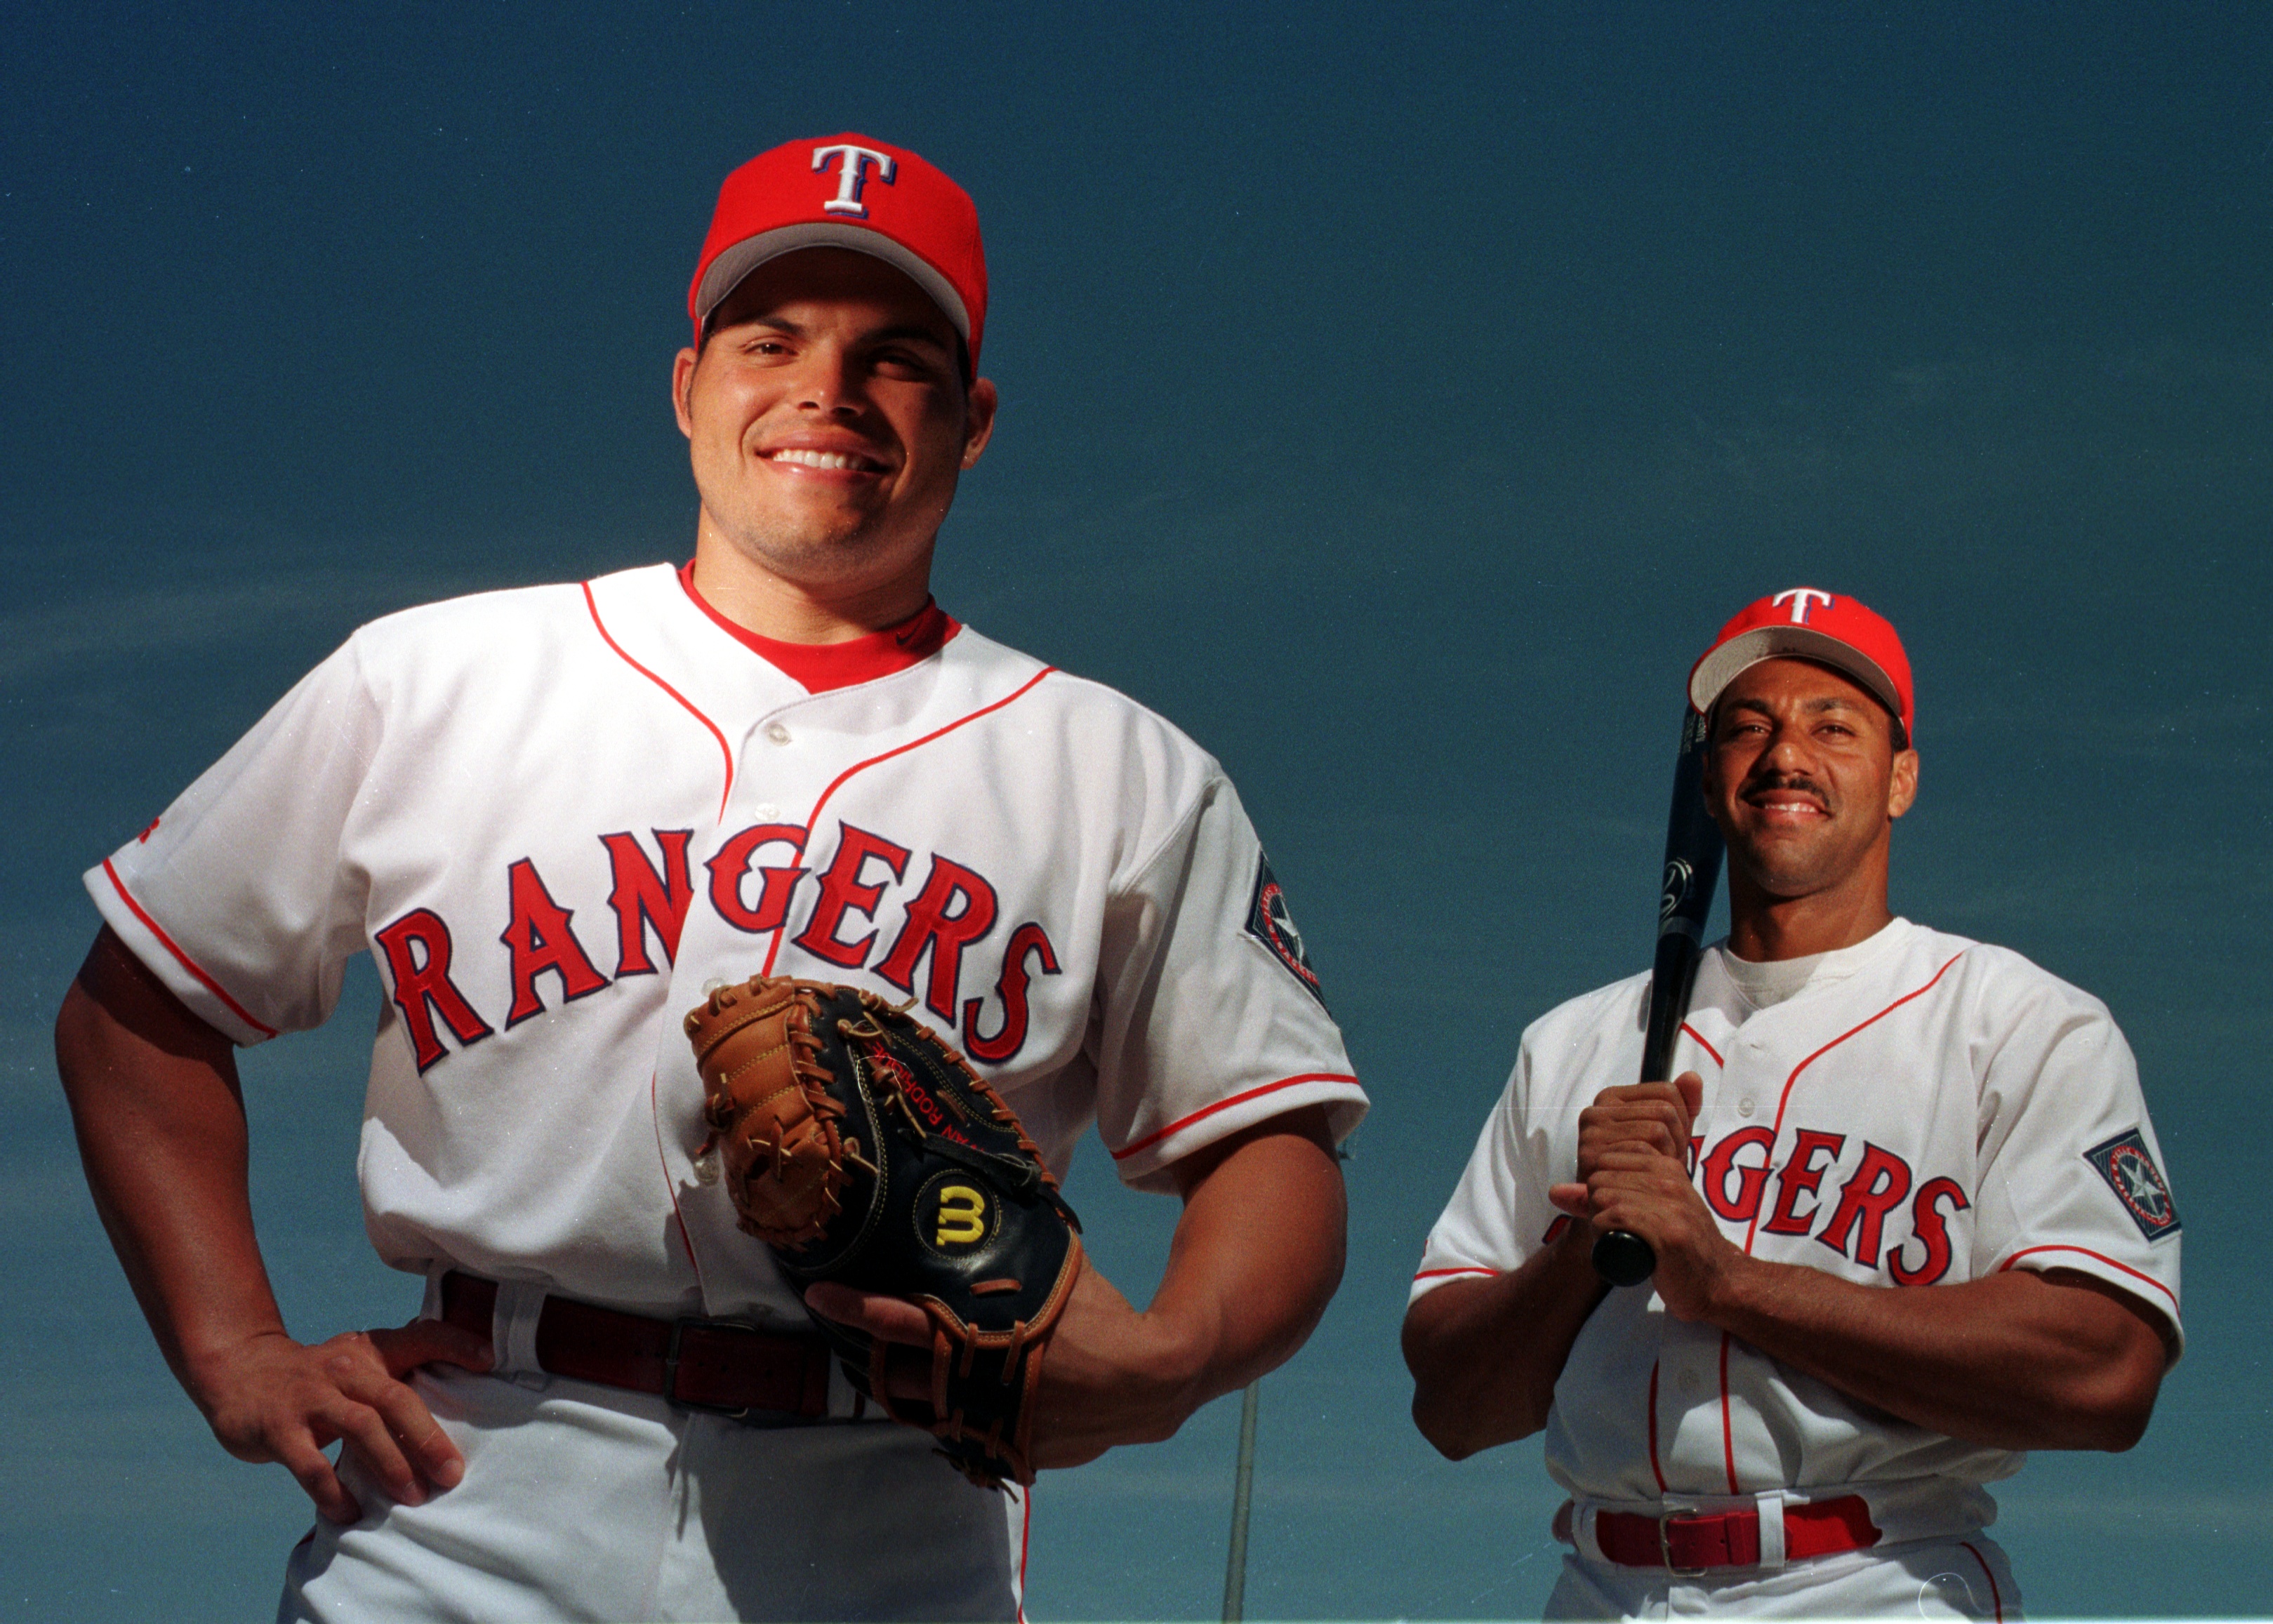 Luis Gonzalez on his son growing up around baseball